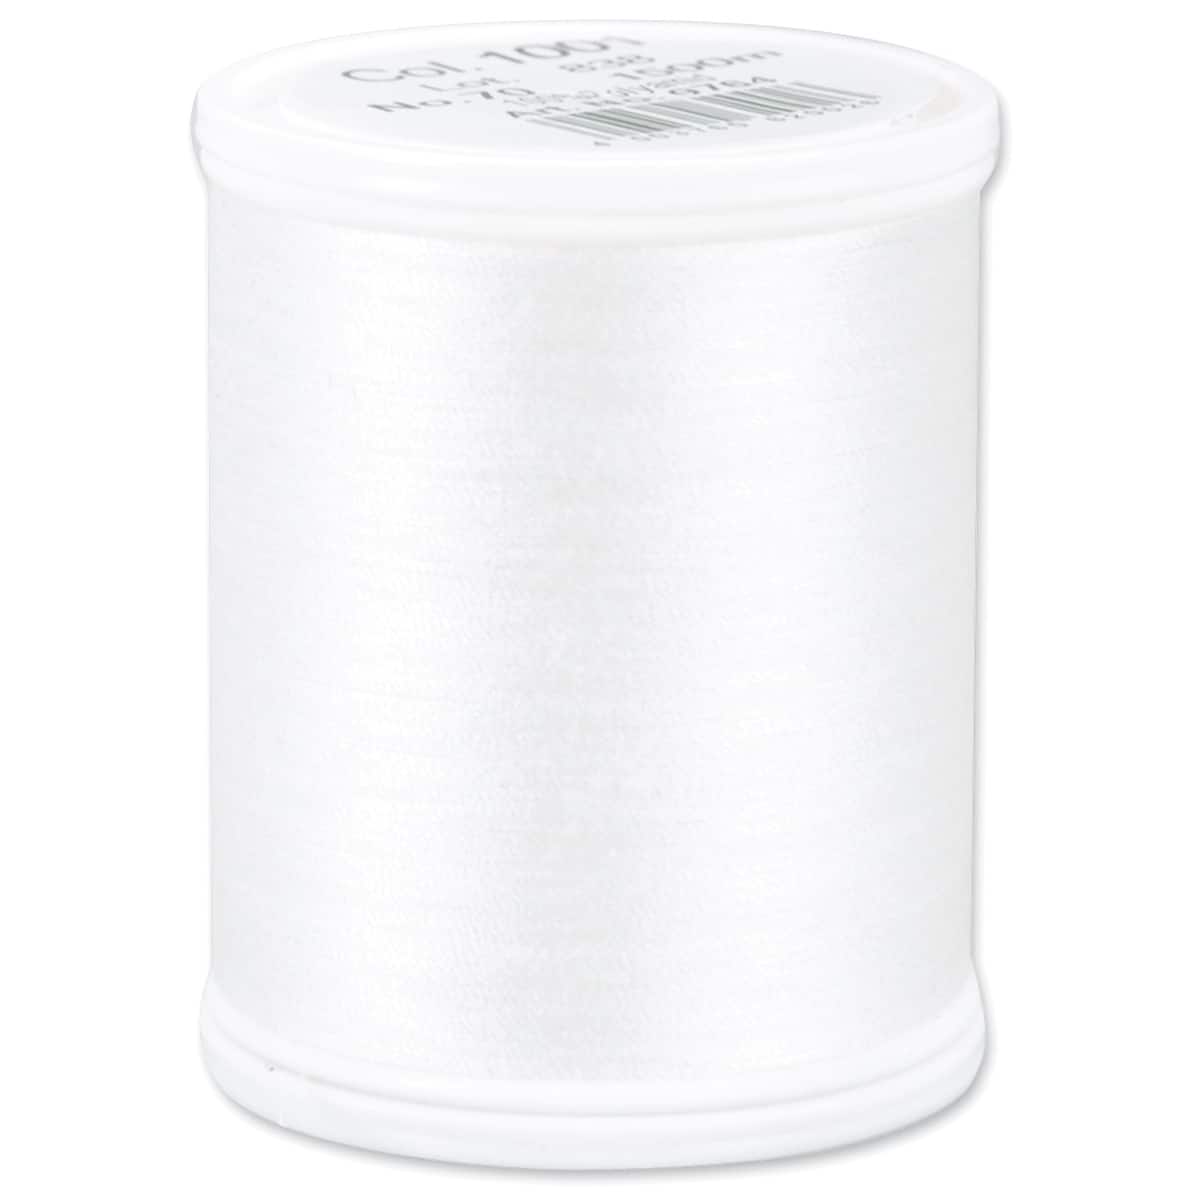 MADEIRA Bobbinfil Embroidery Bobbin Thread 1640YD Spool White 70 Weight